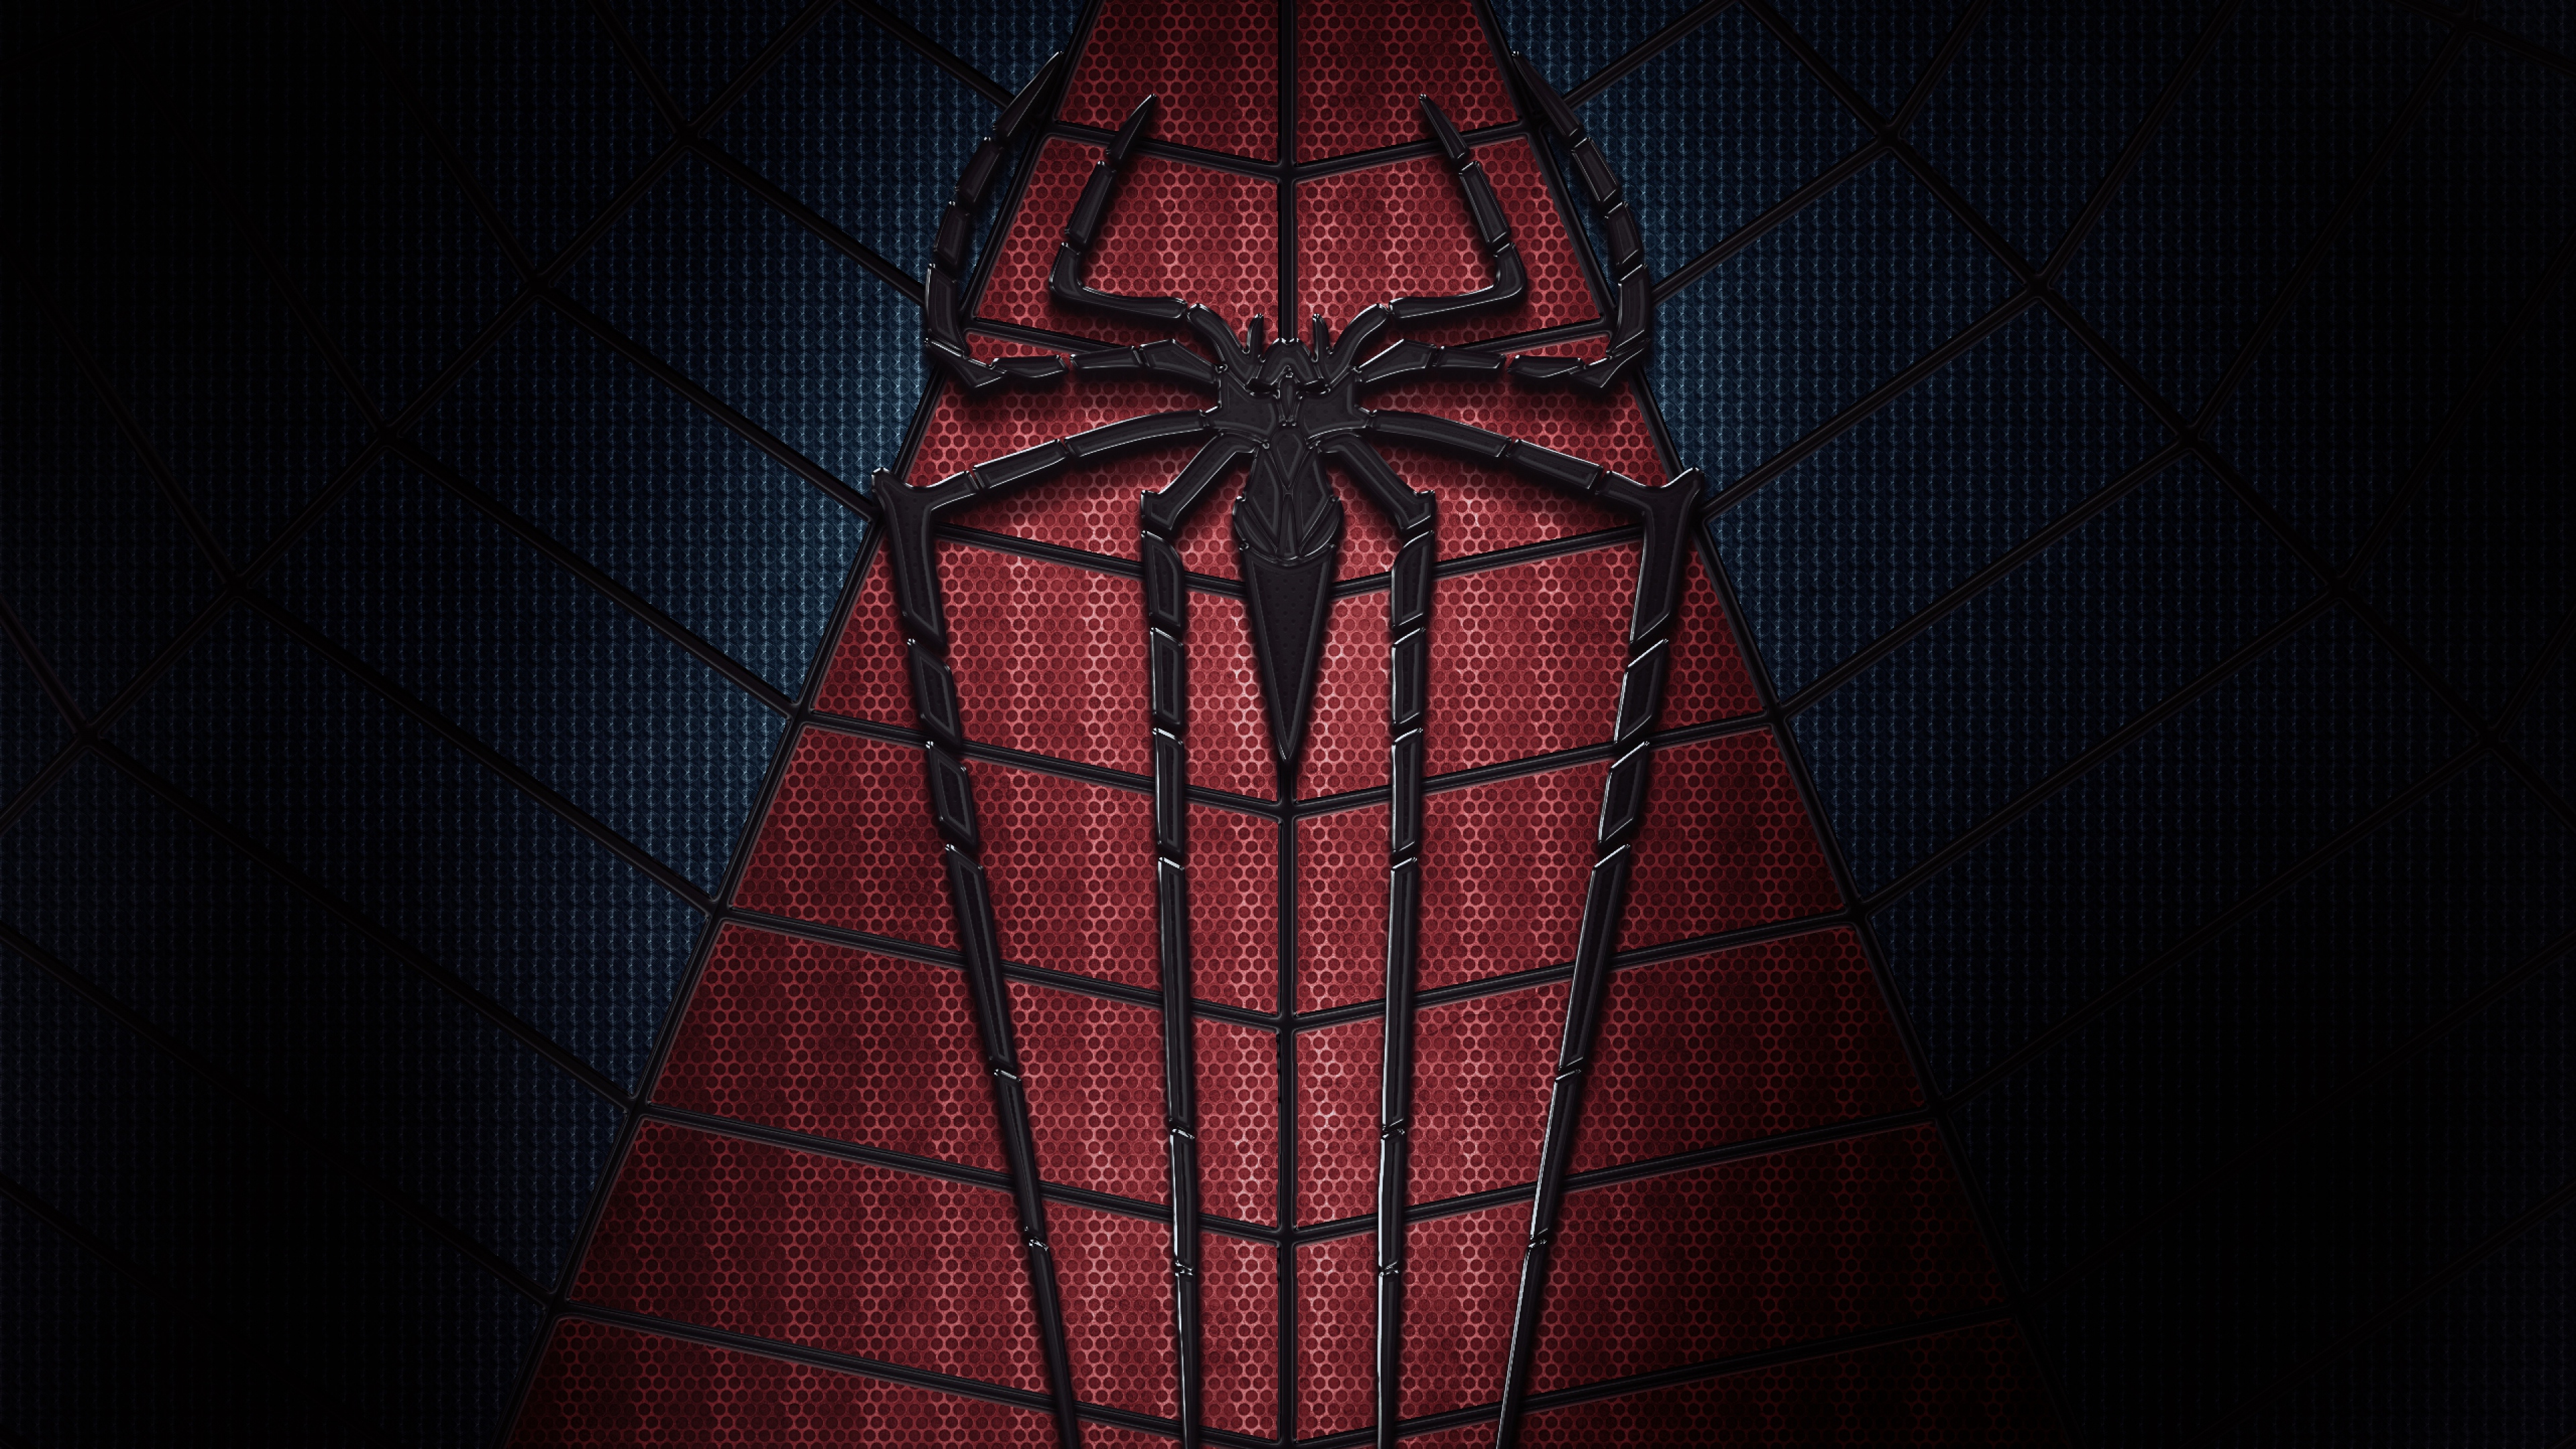 Wallpaper 3840x2160 The amazing spider man 2 Logo Superhero 2014 4K 3840x2160